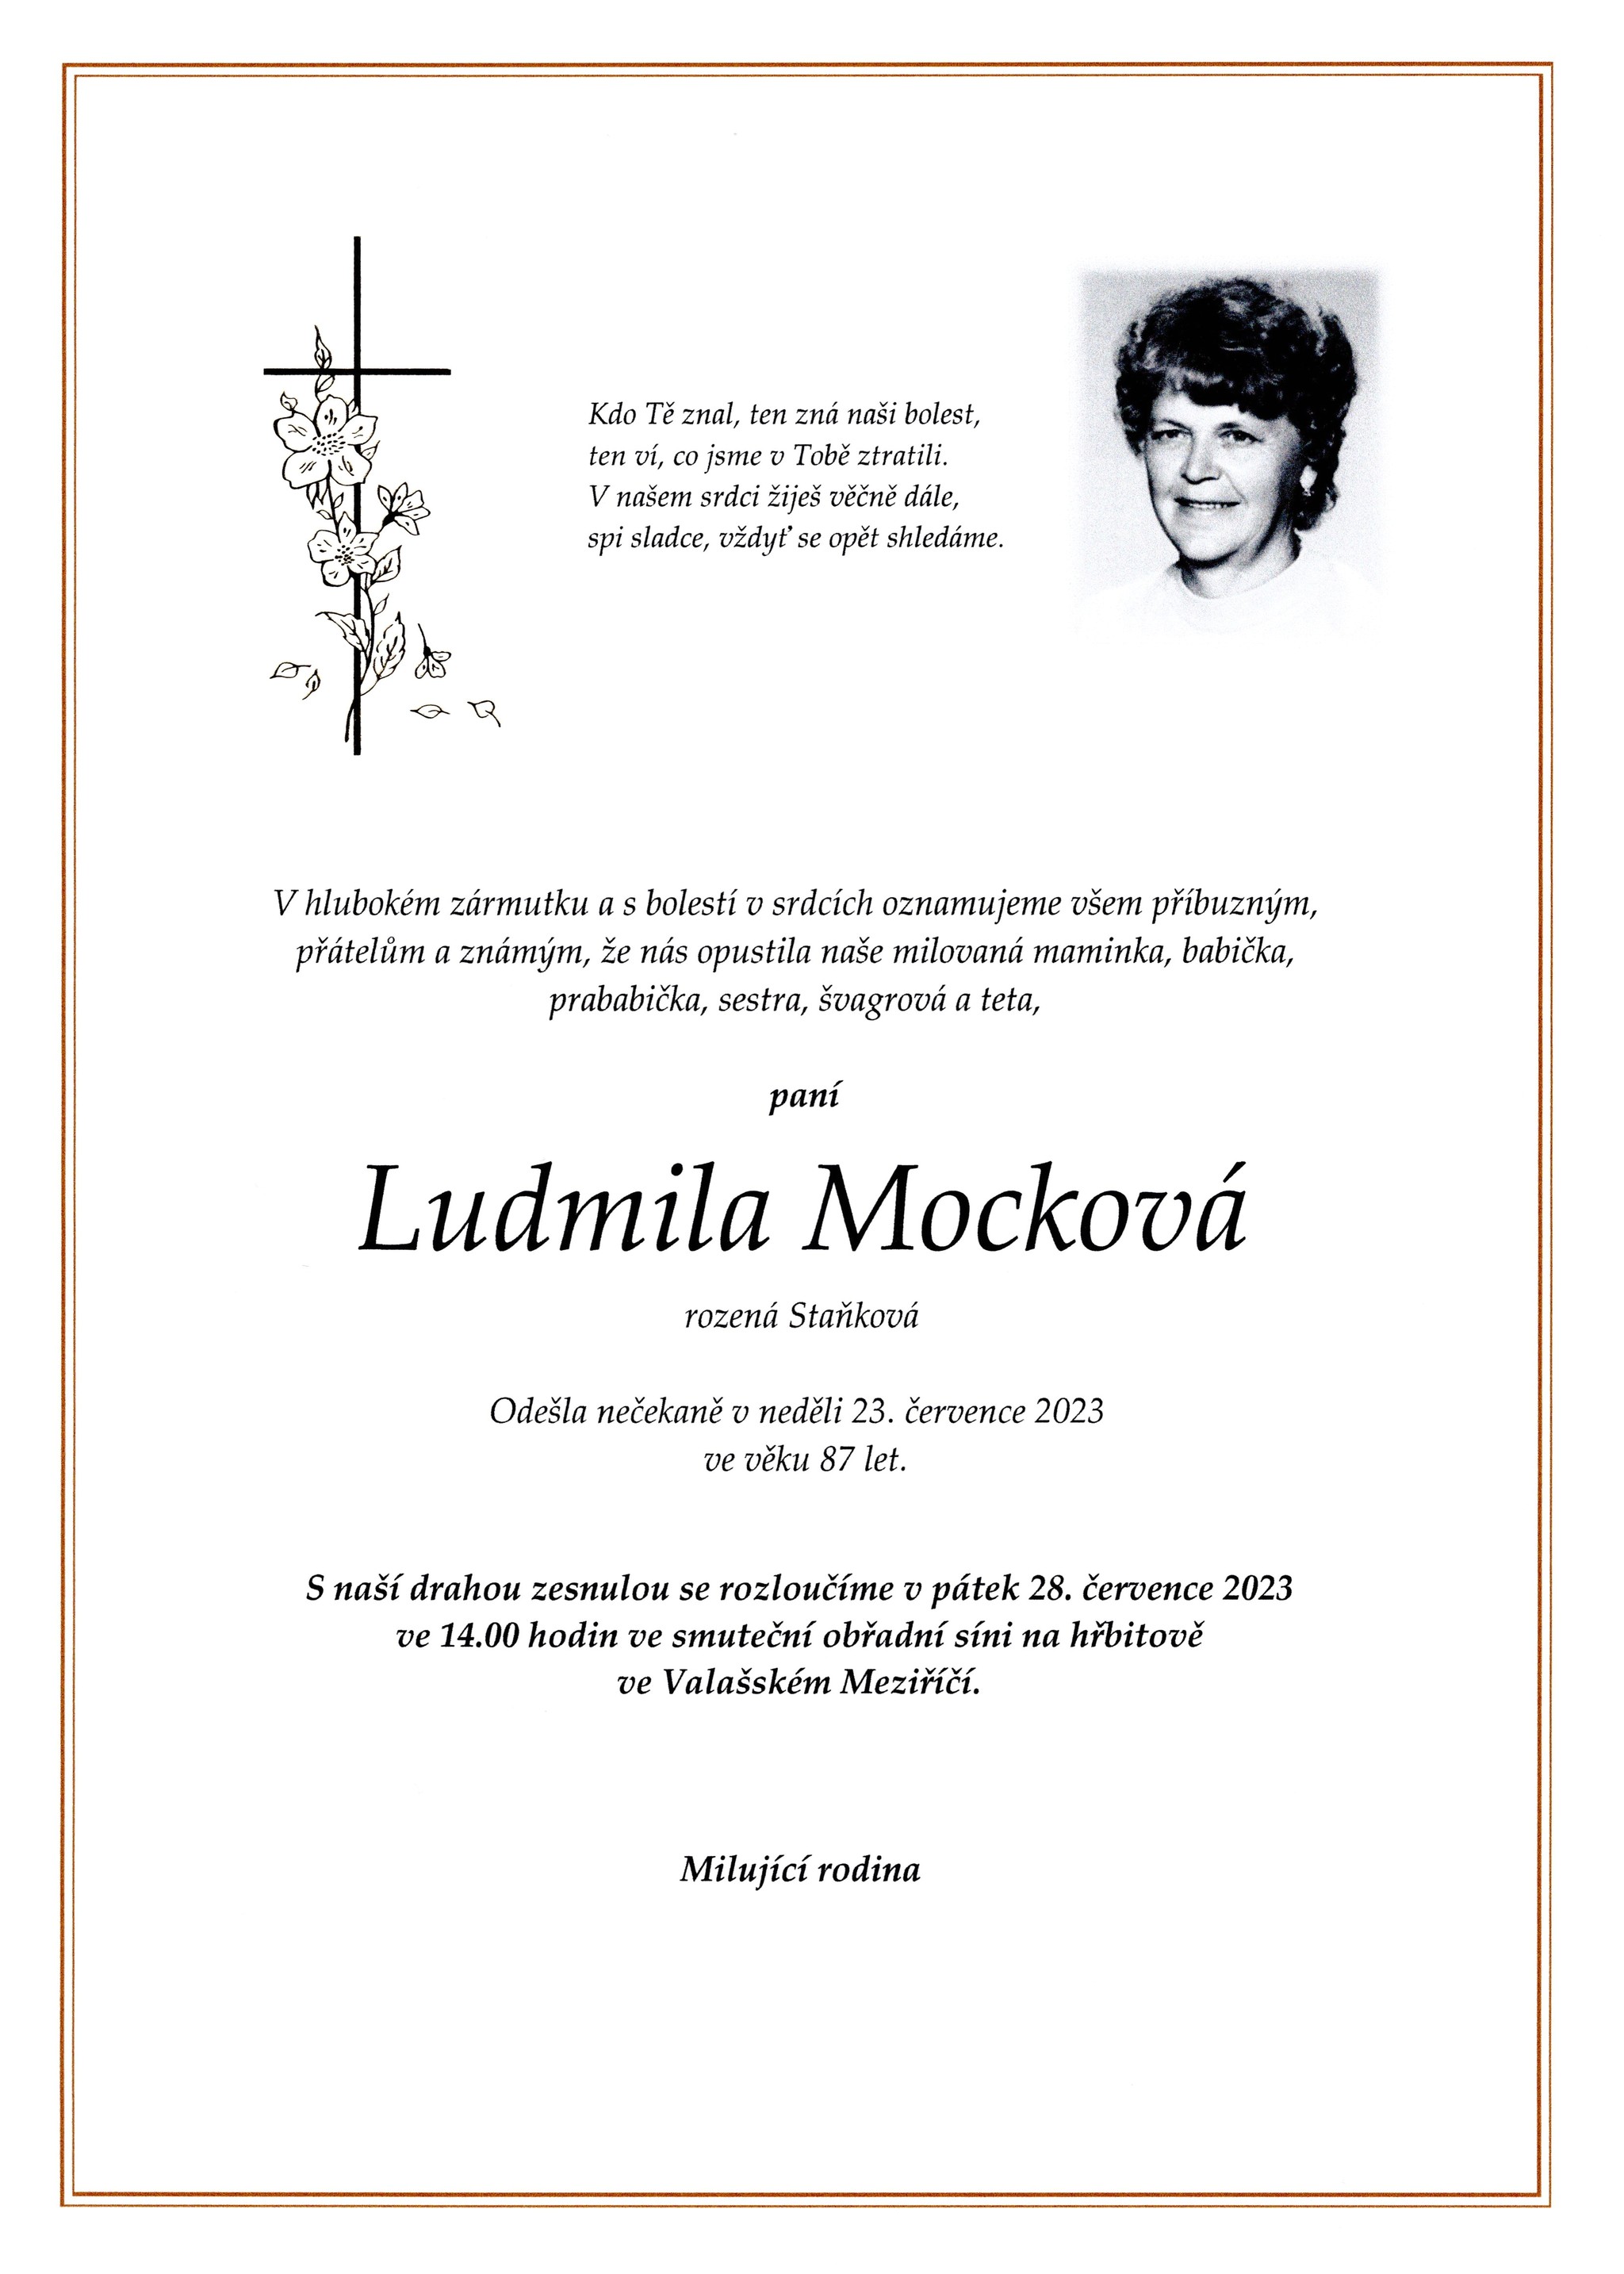 Ludmila Mocková